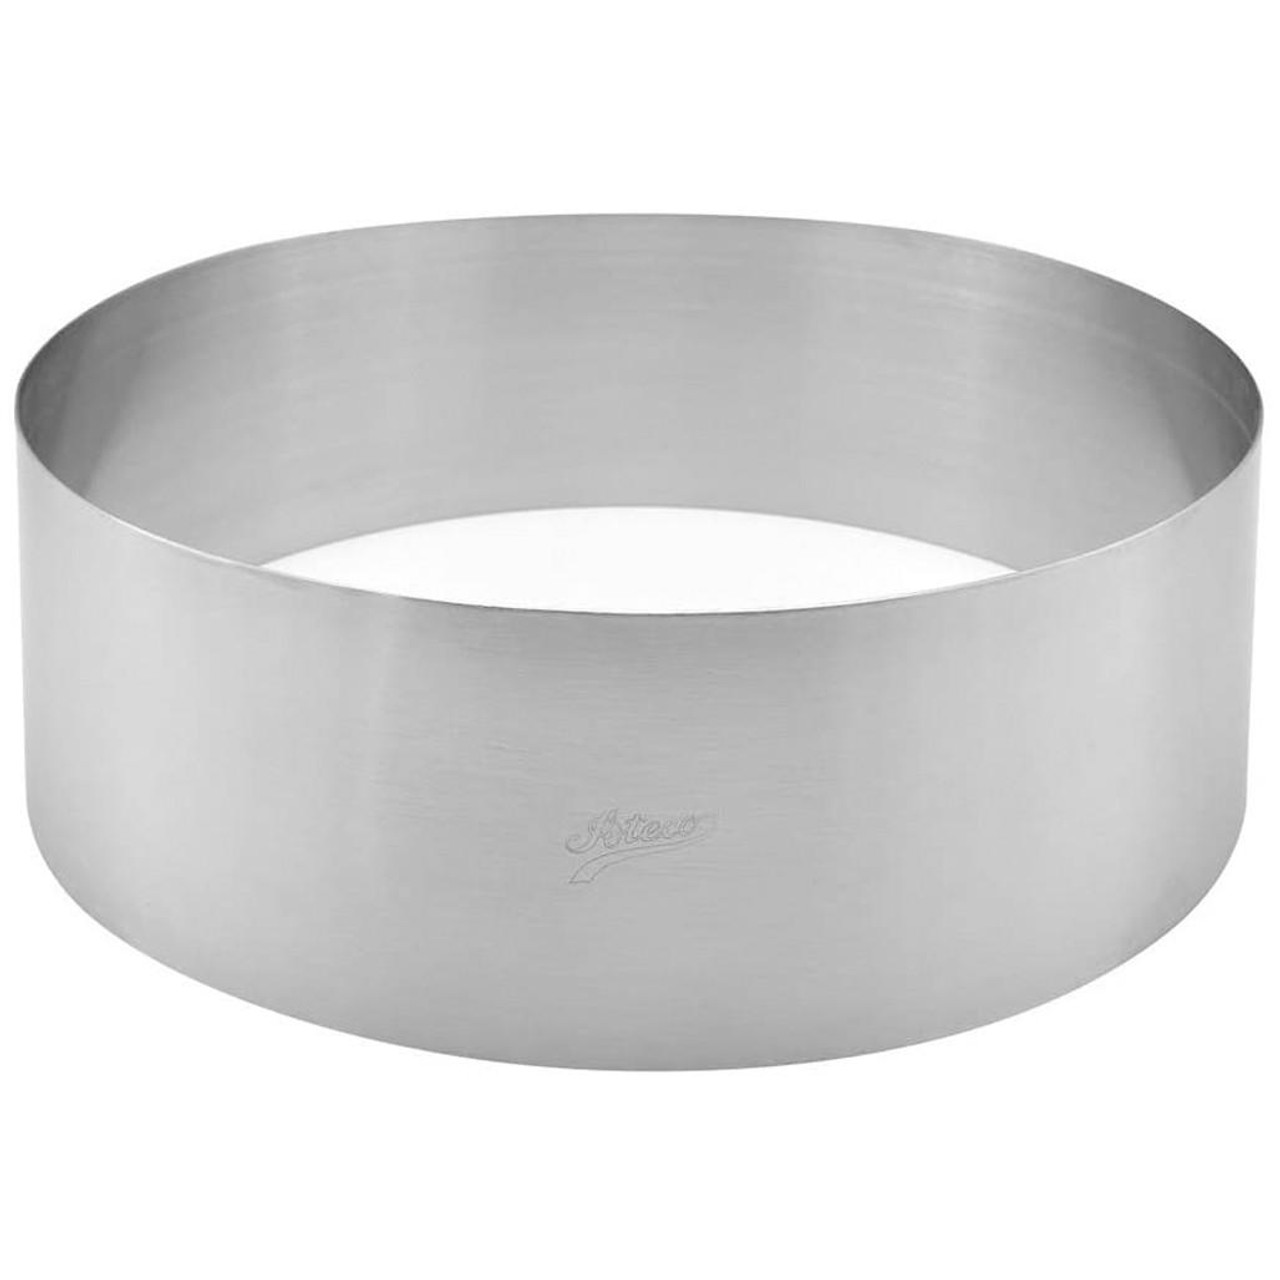 Stainless Steel Cake Ring Molds Round Tower Ring Tart Ring Tart Crust Bread